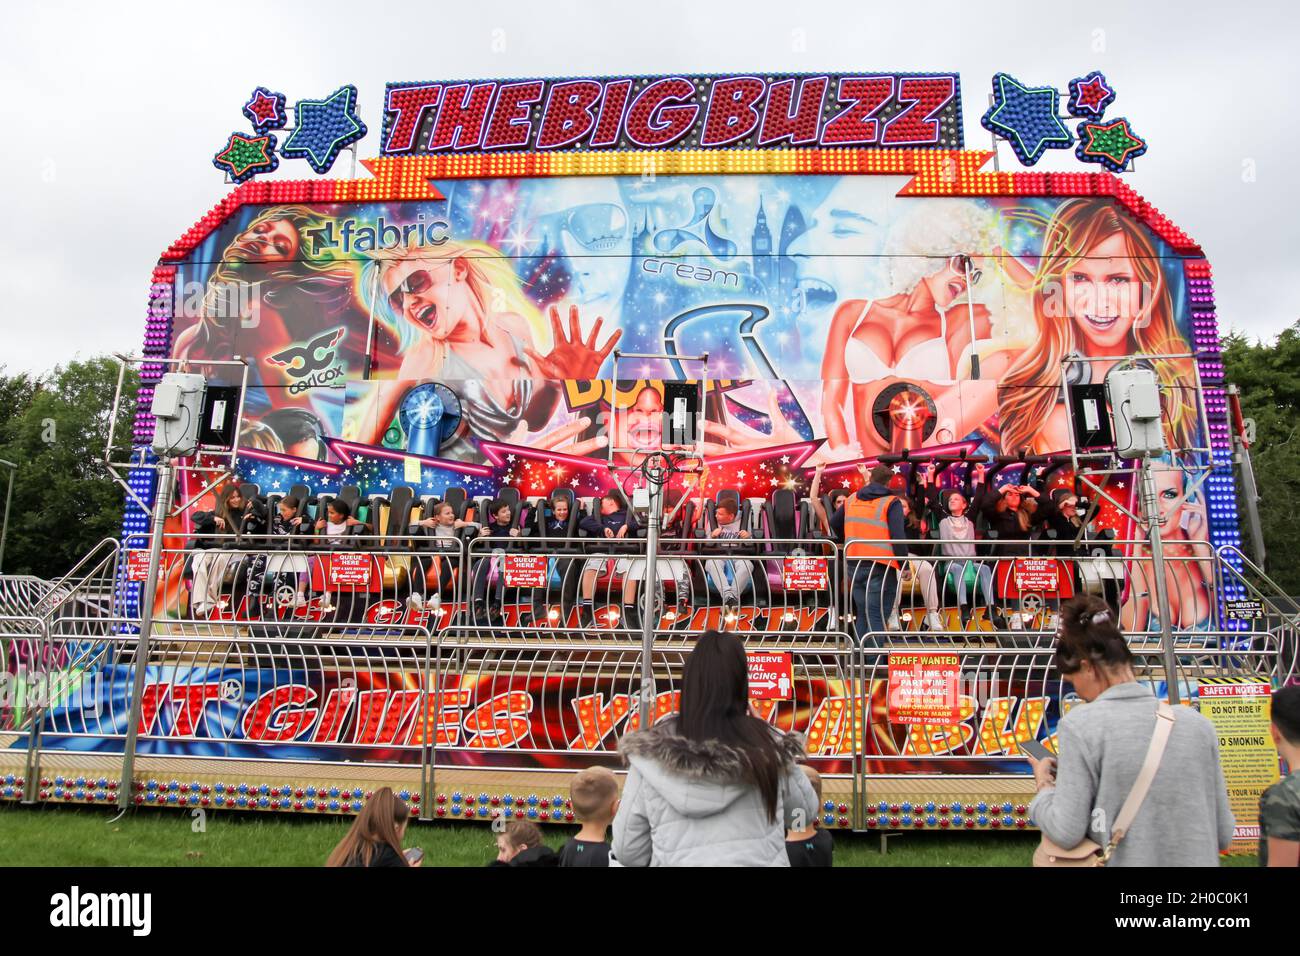 The Big Buzz fairground ride at Leatherhead Fun fair July 2021 Stock Photo